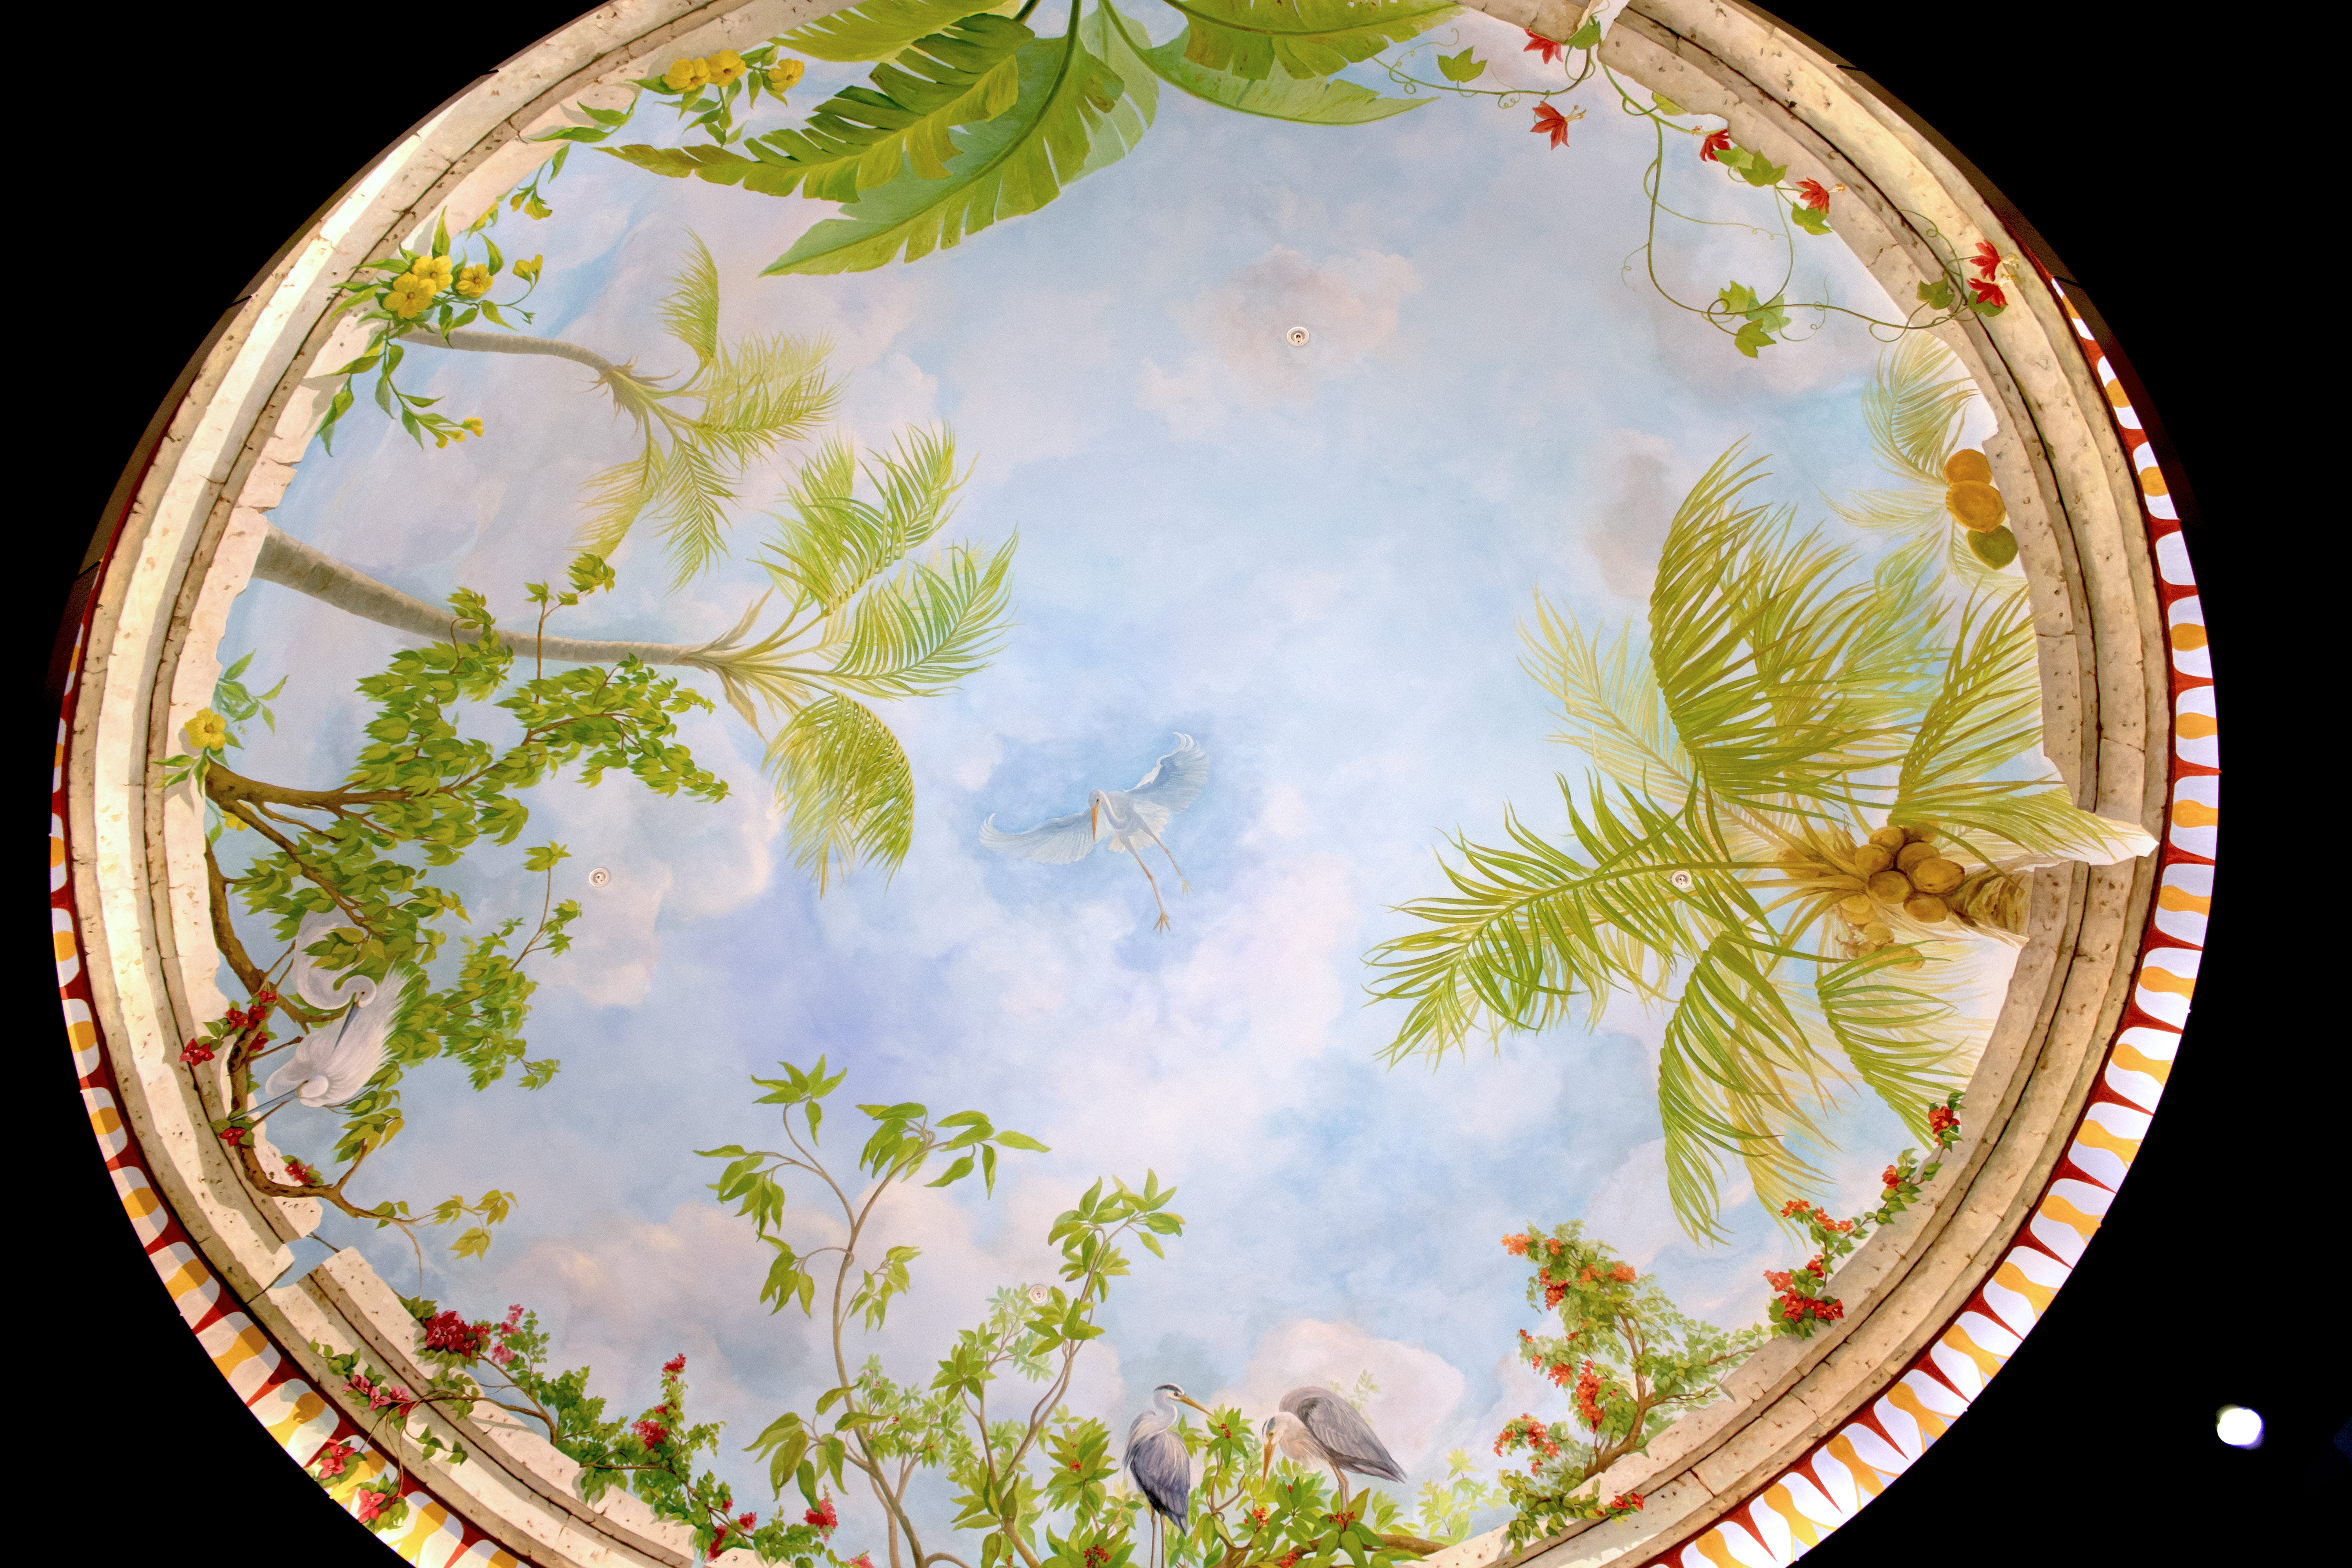 Dome in rotunda mural detail with Florida flora and fauna, palm trees, banana tree, blue heron, egrets, public art mural, South Florida murals